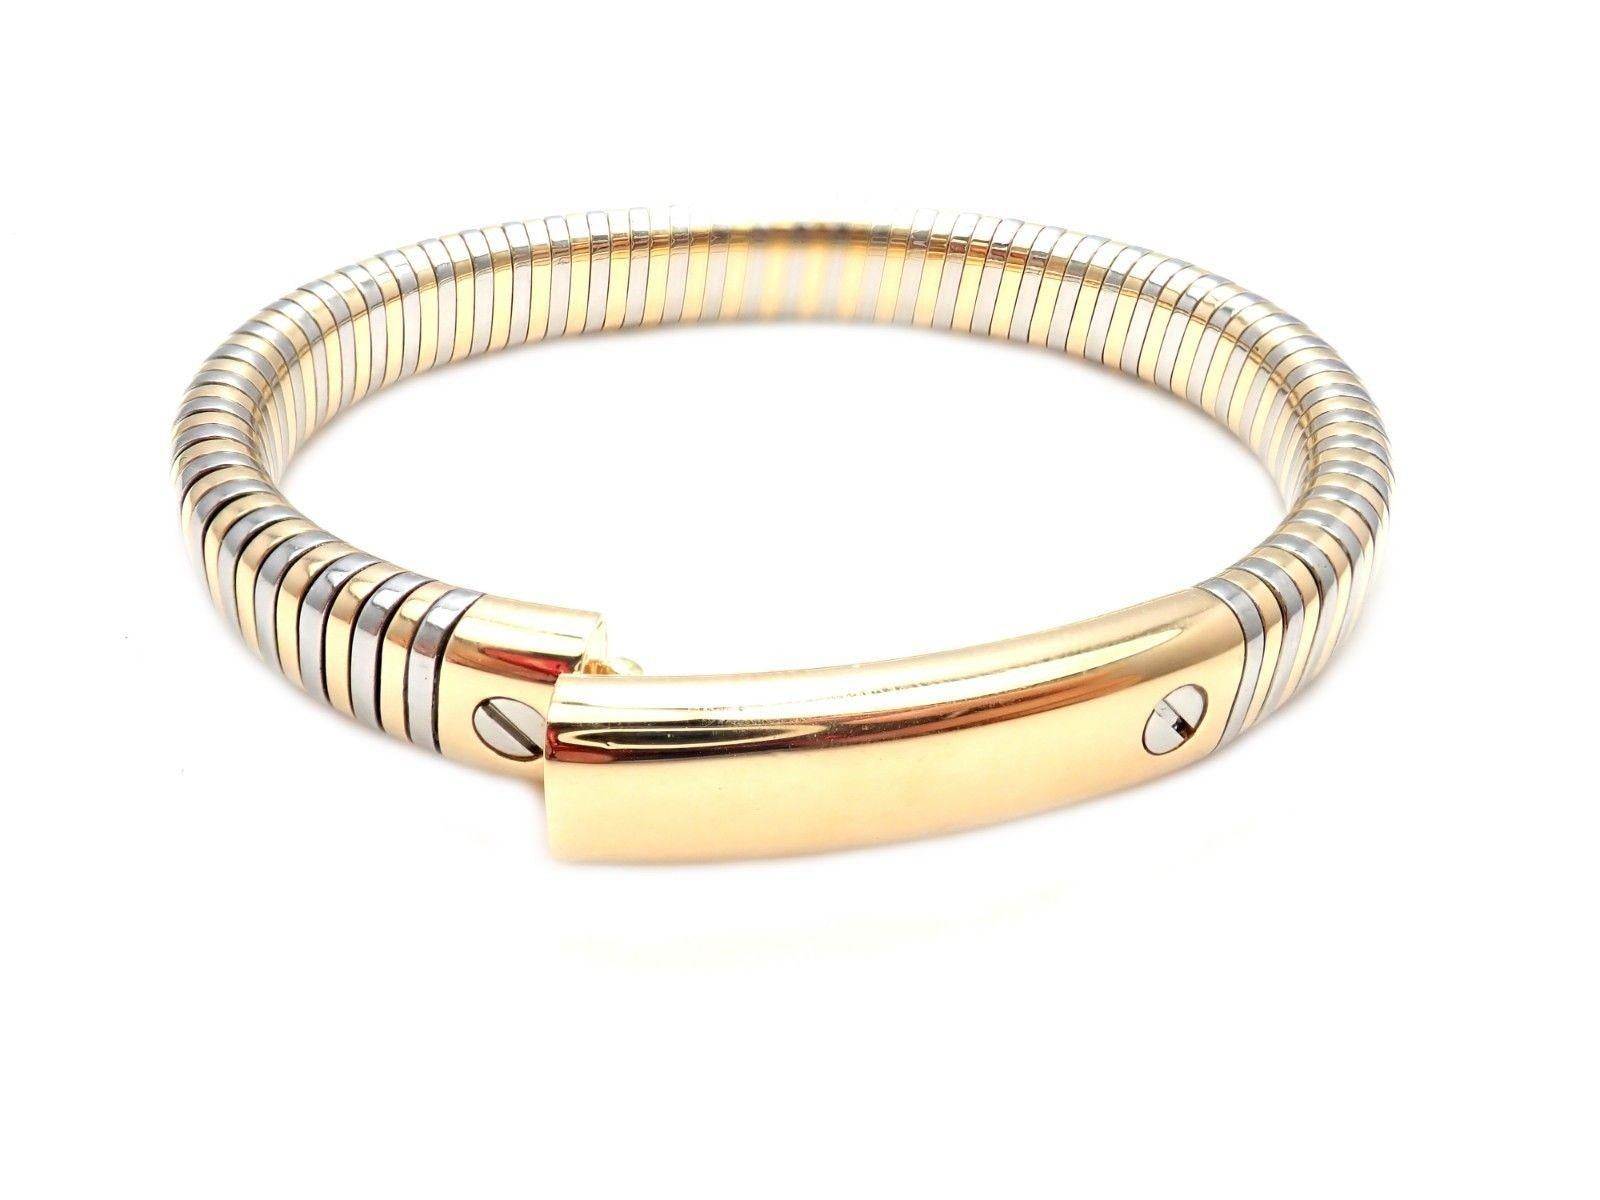 bracelet en or jaune 18k et acier inoxydable de Van Cleef & Arpels. 
Détails :
Longueur : 7.5